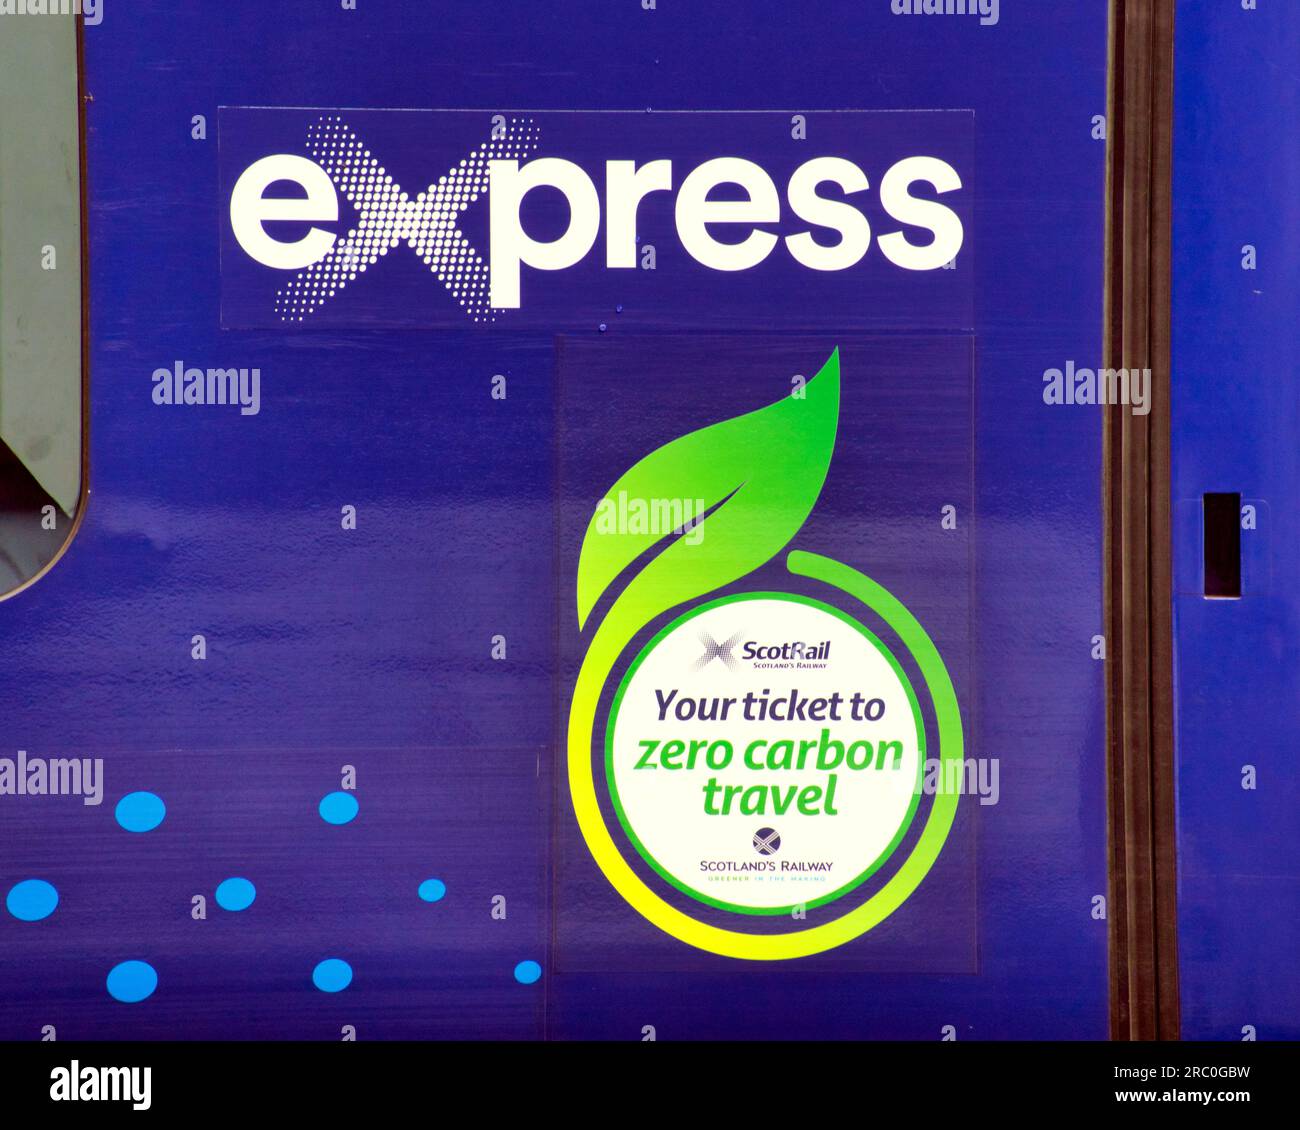 scotrail express ticket machine carbon free travel advert Stock Photo